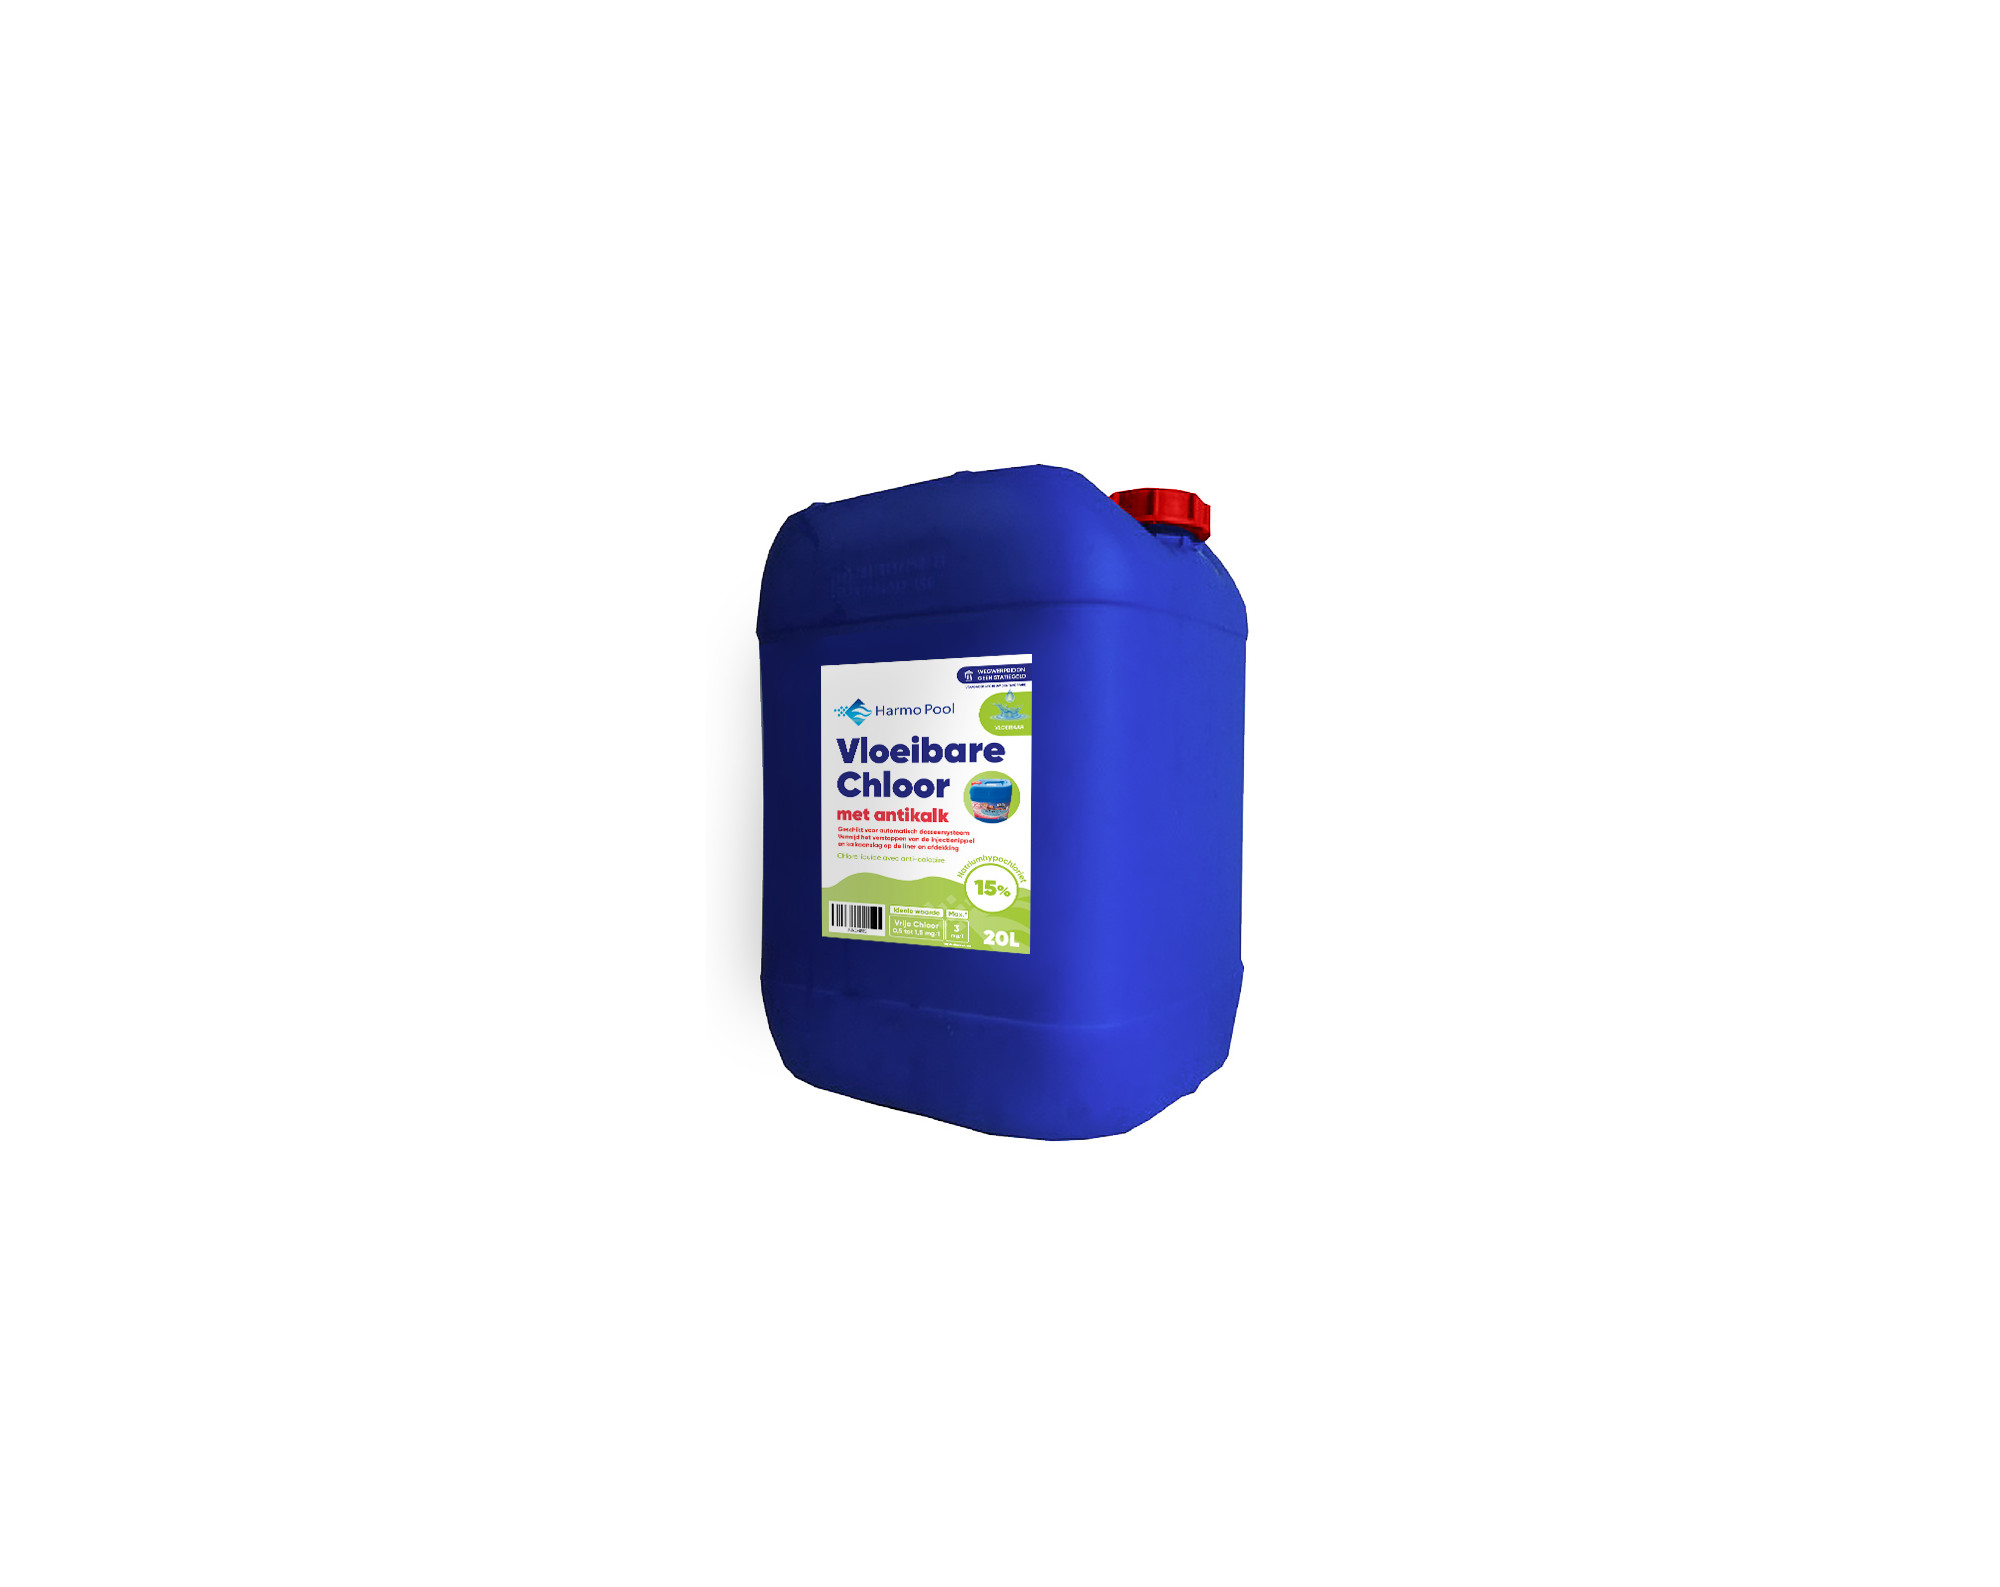 Multifunctionele vloeibare chloor (20L) met antikalk (wegwerp bidon)